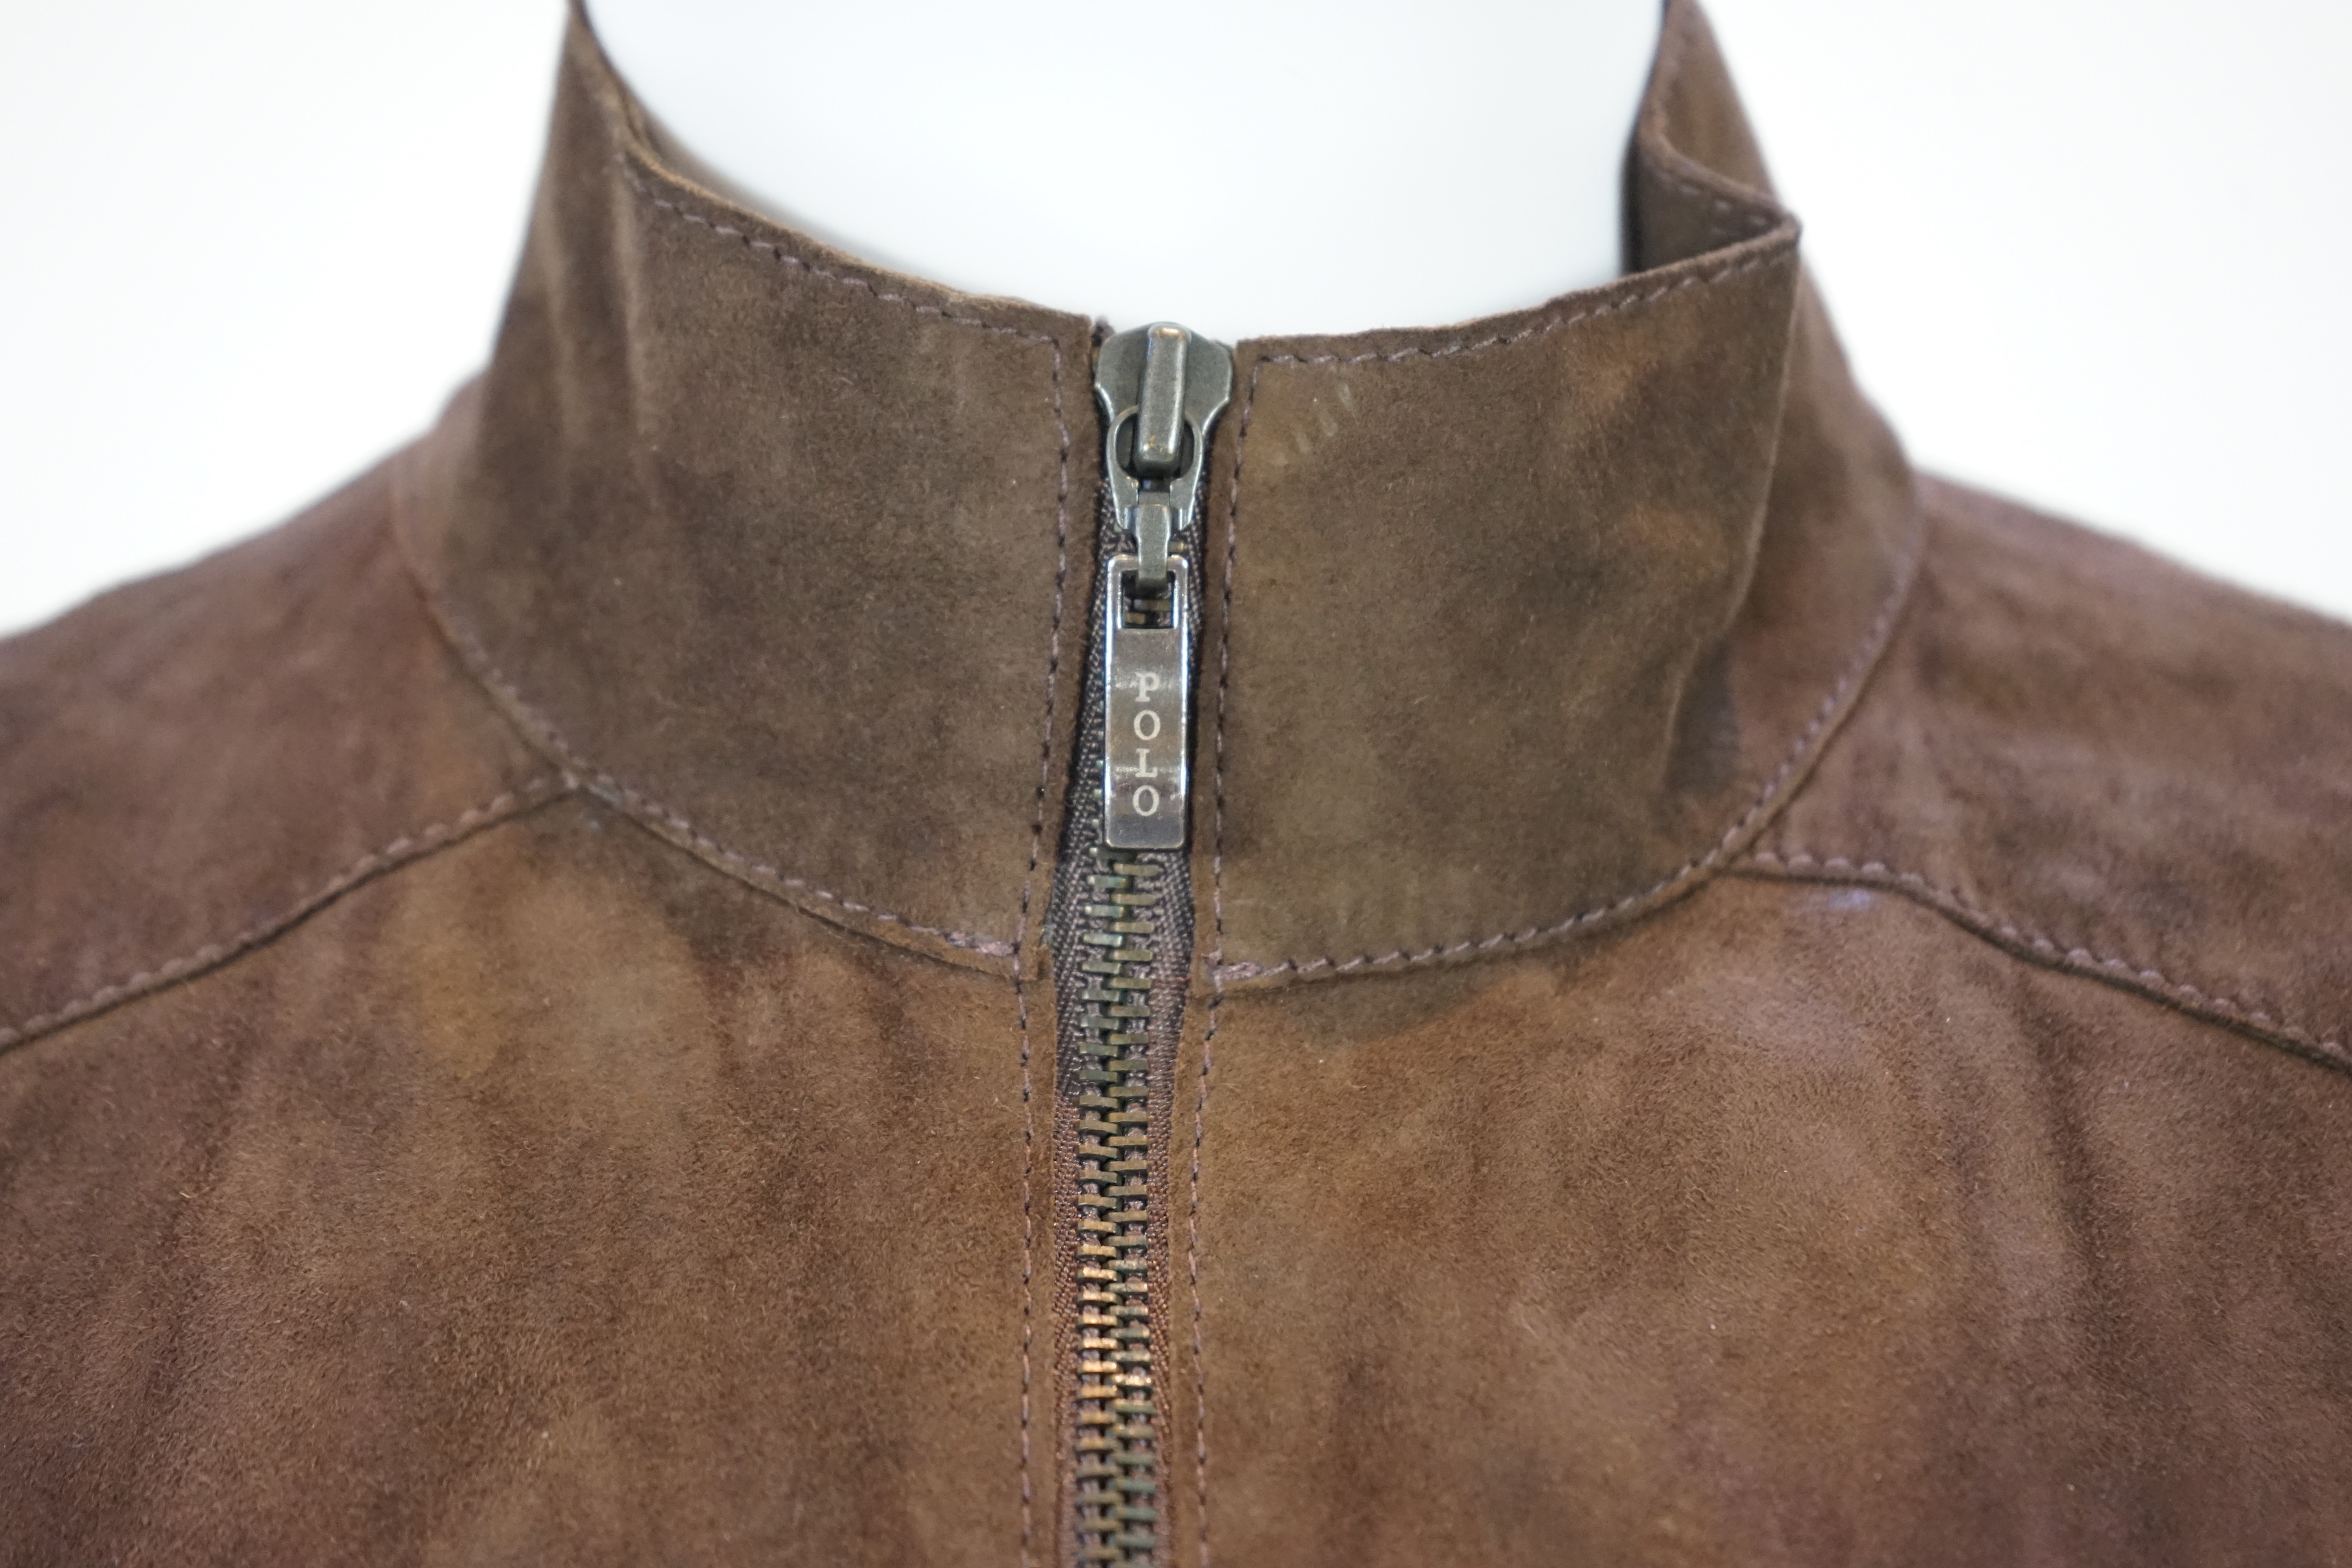 A Ralph Lauren, Polo Collection brown suede jacket, size EU 38